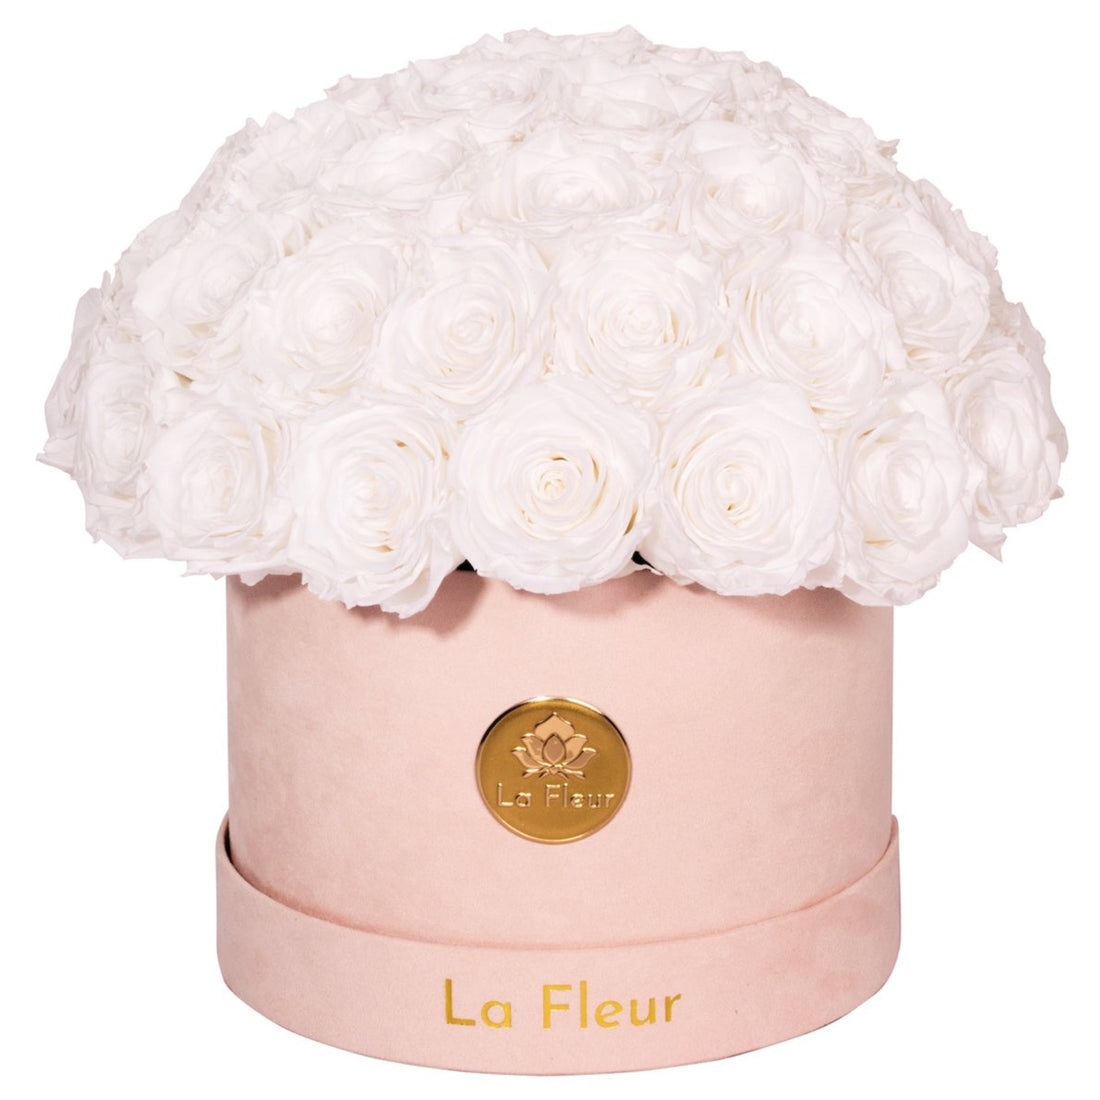 Dôme La Fleur by La Fleur Lifetime Flowers